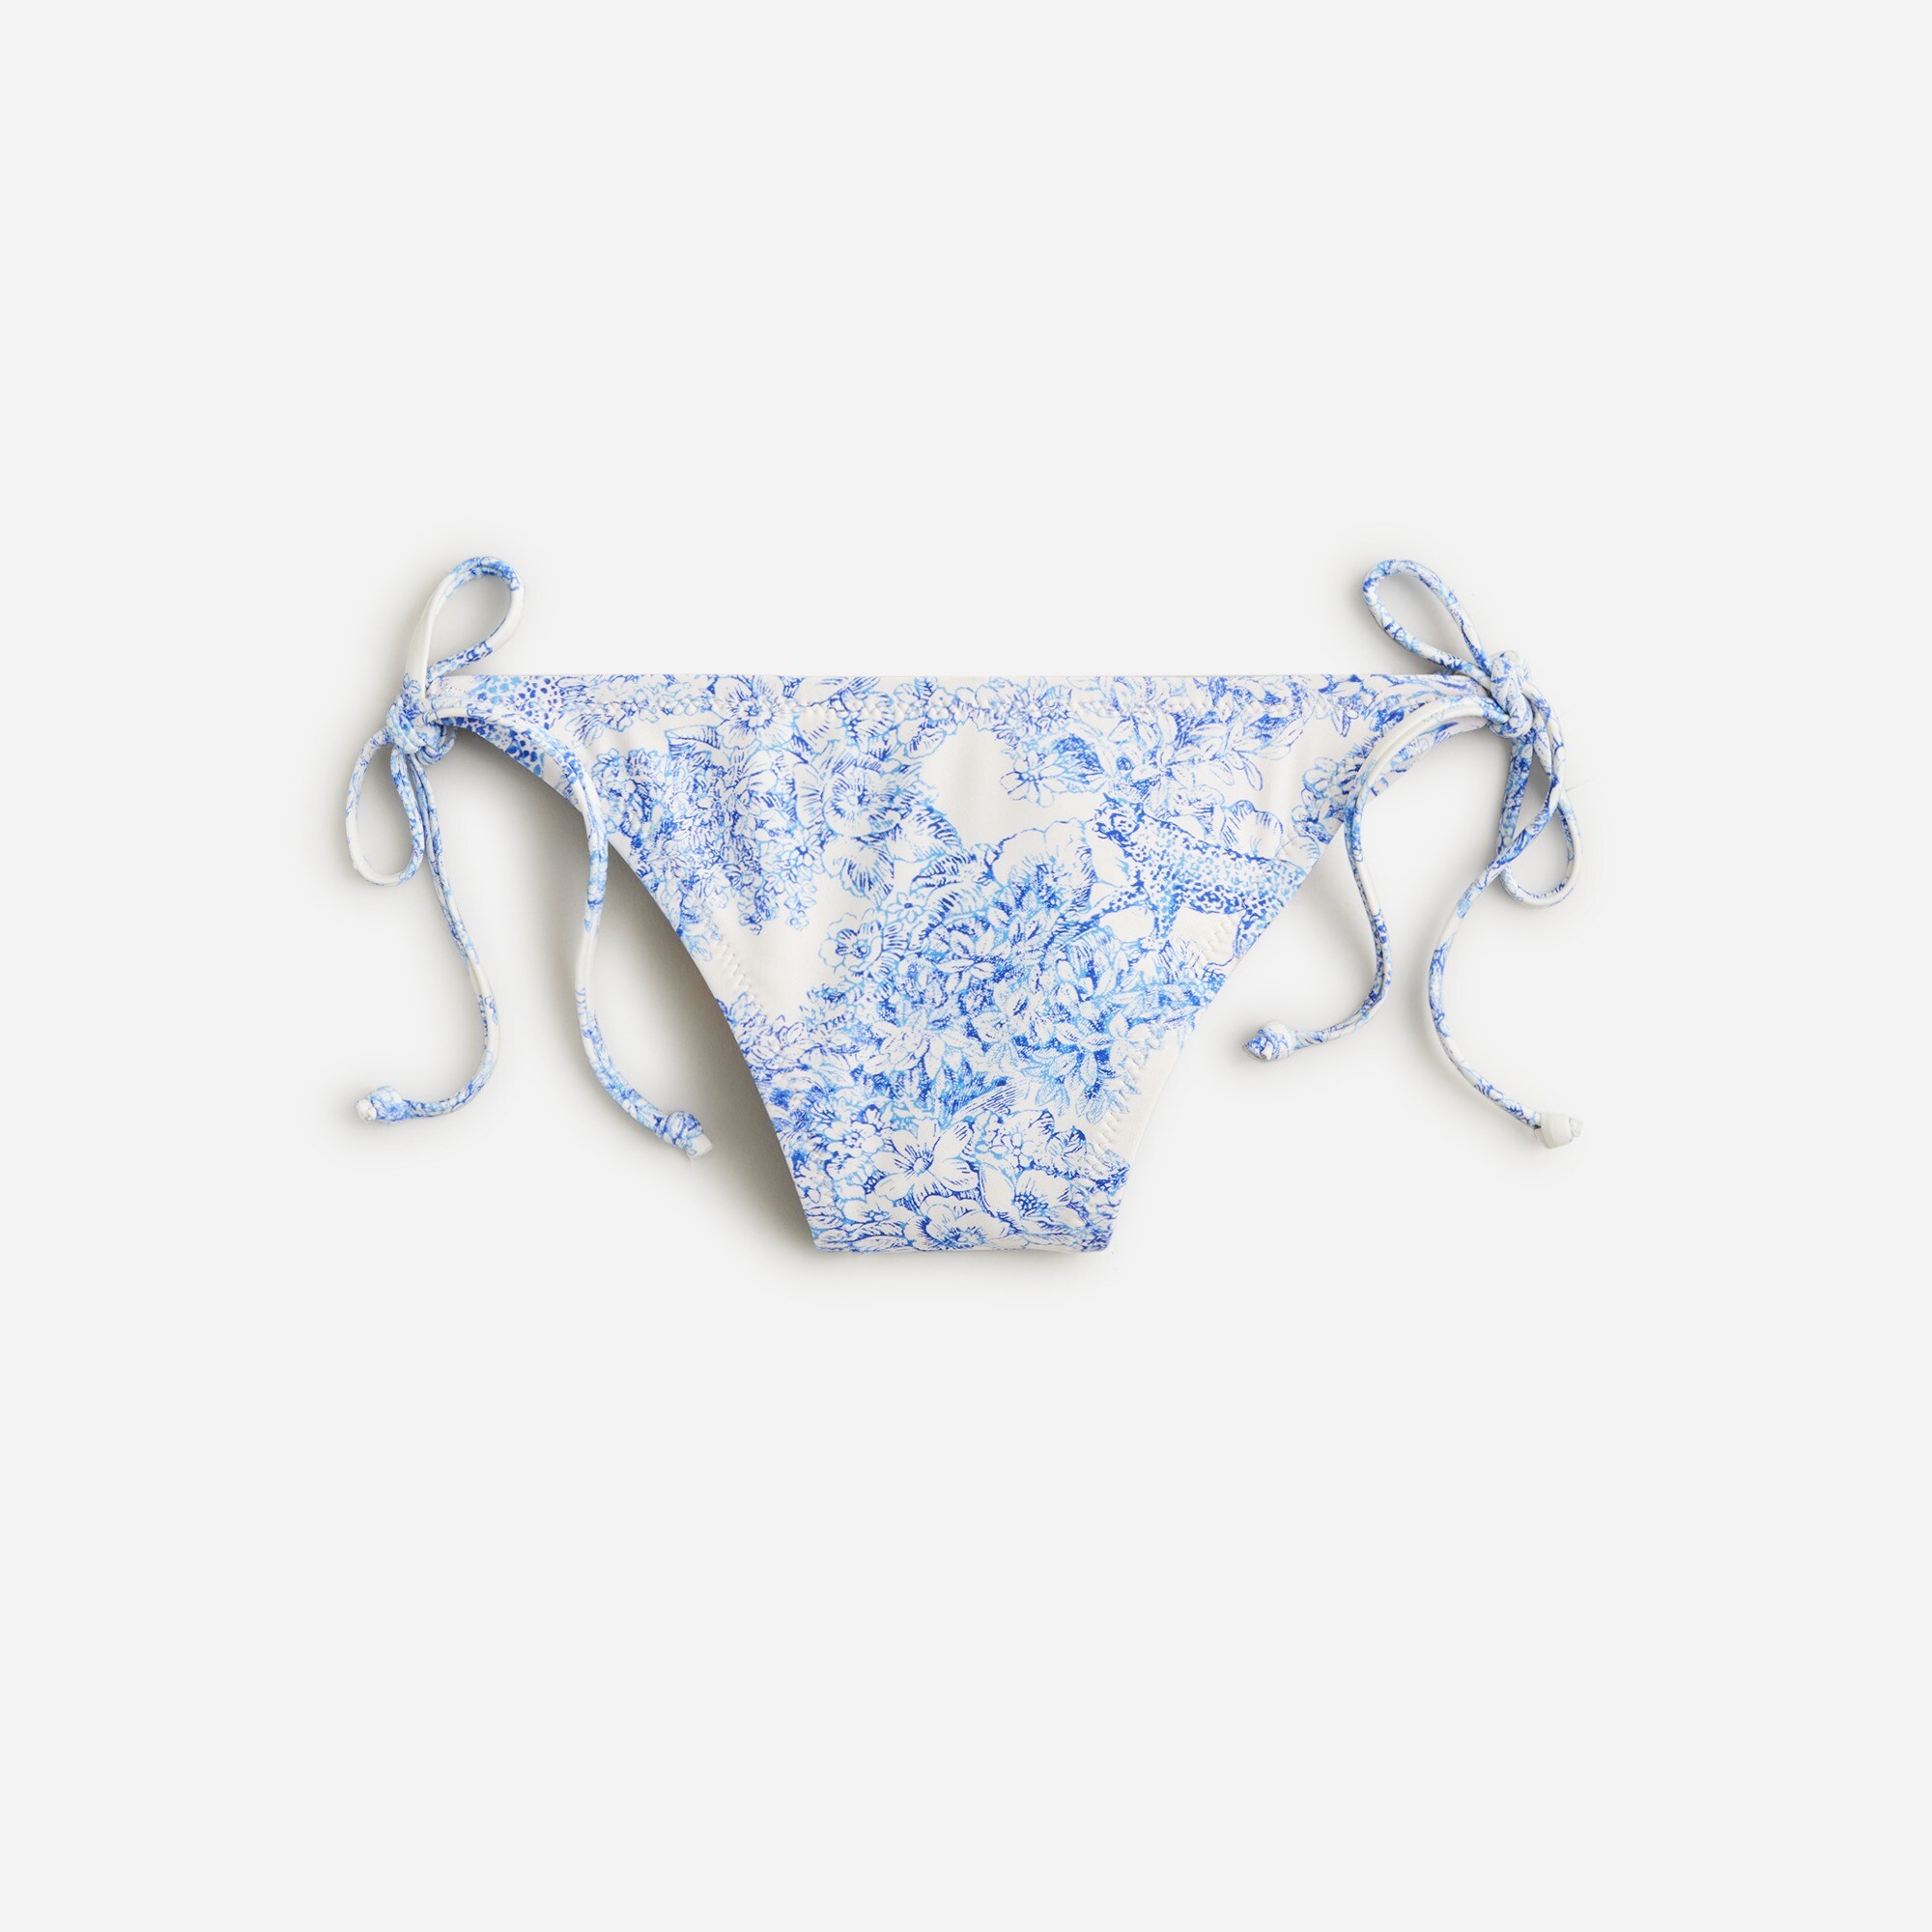  String hipster bikini bottom in blue toile